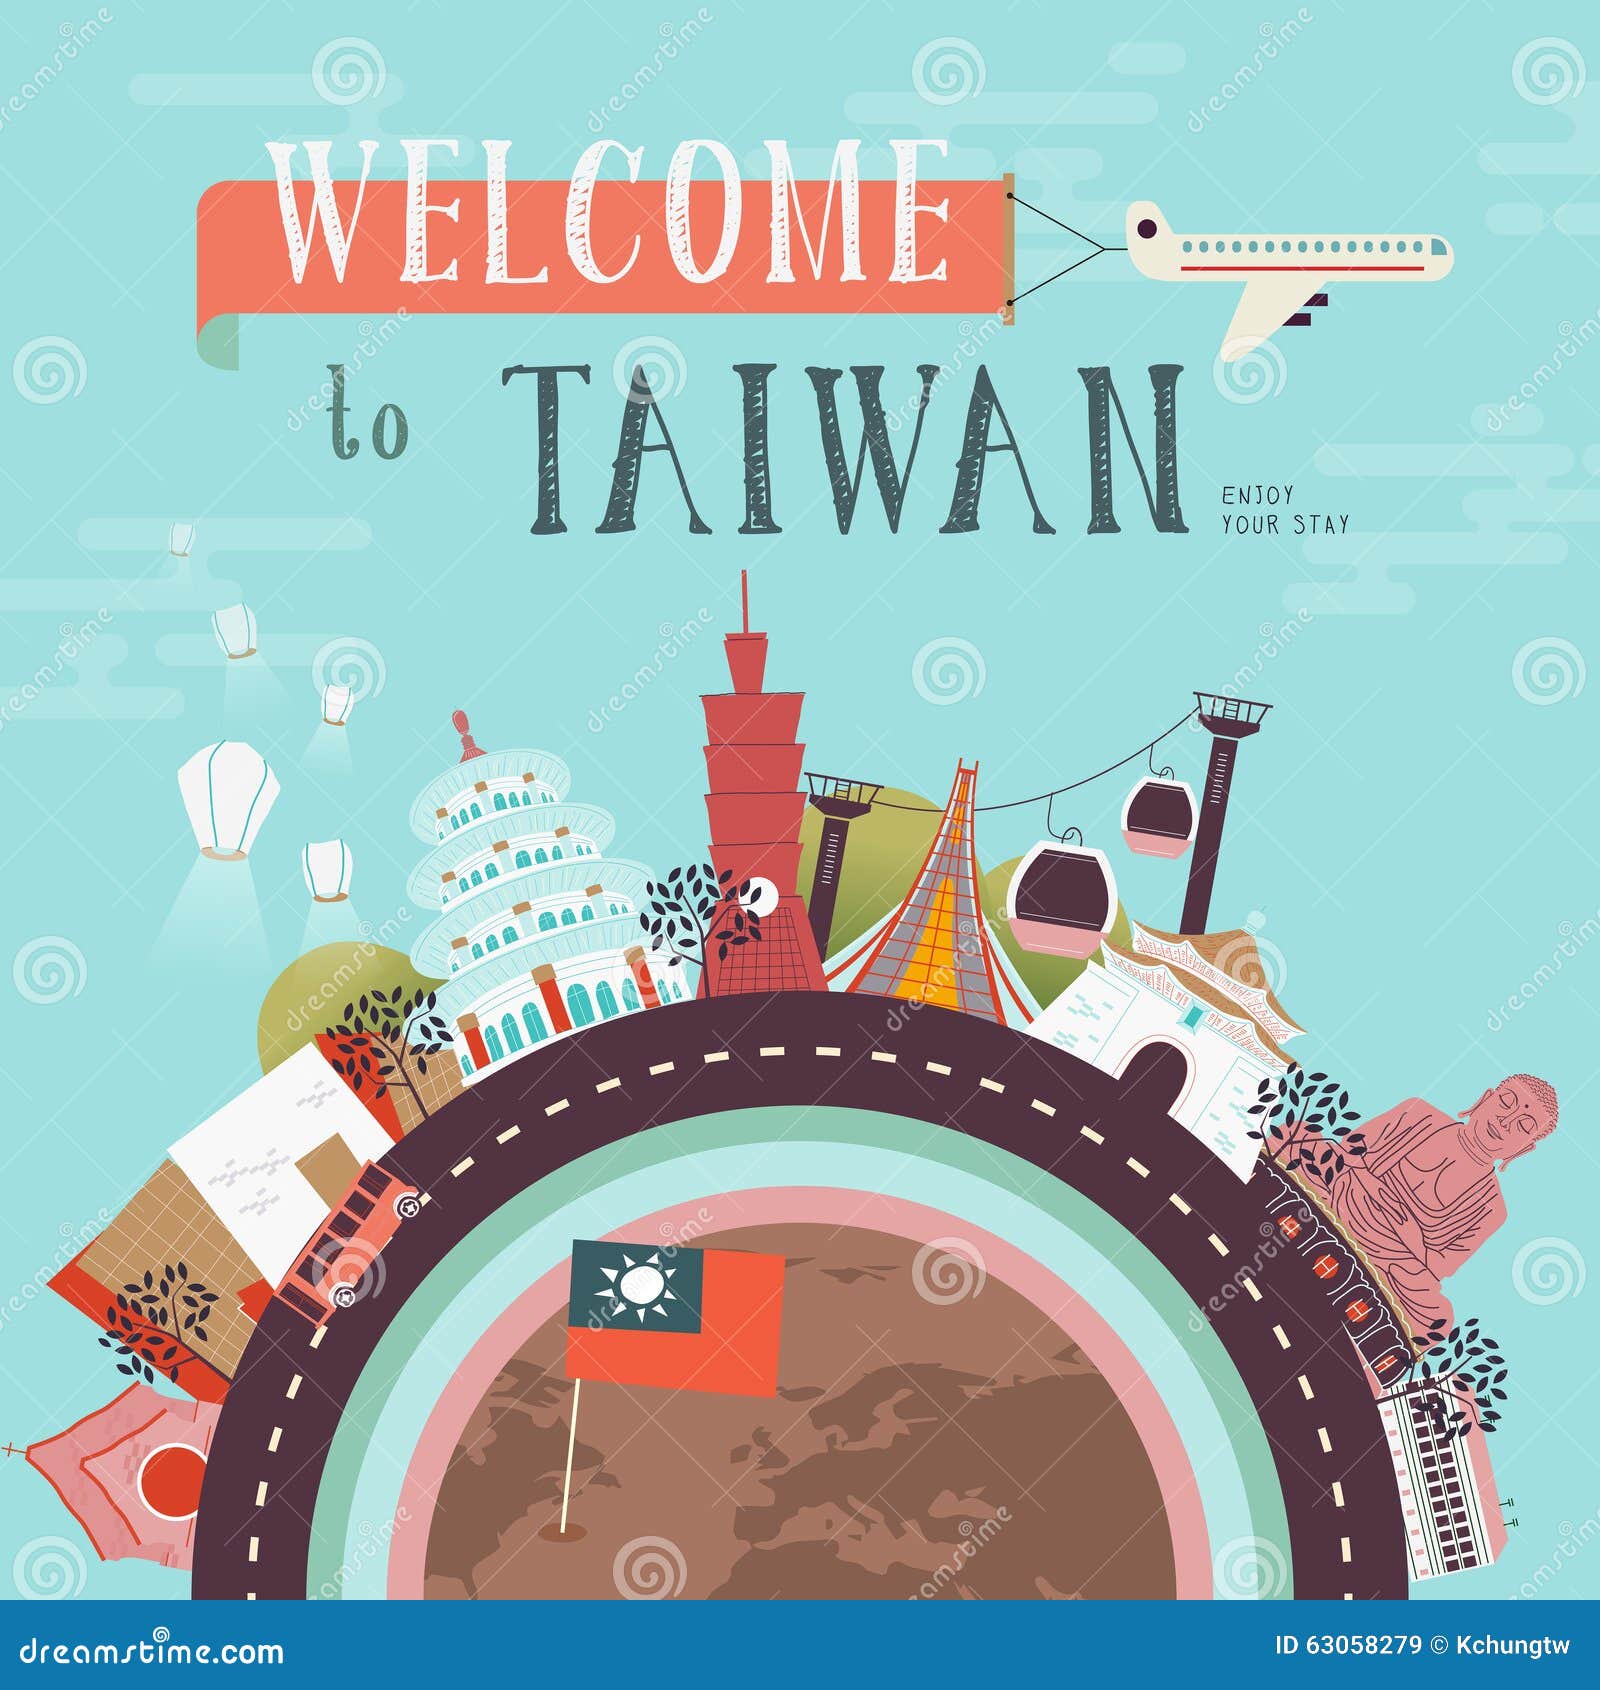 「taiwan travel」的圖片搜尋結果